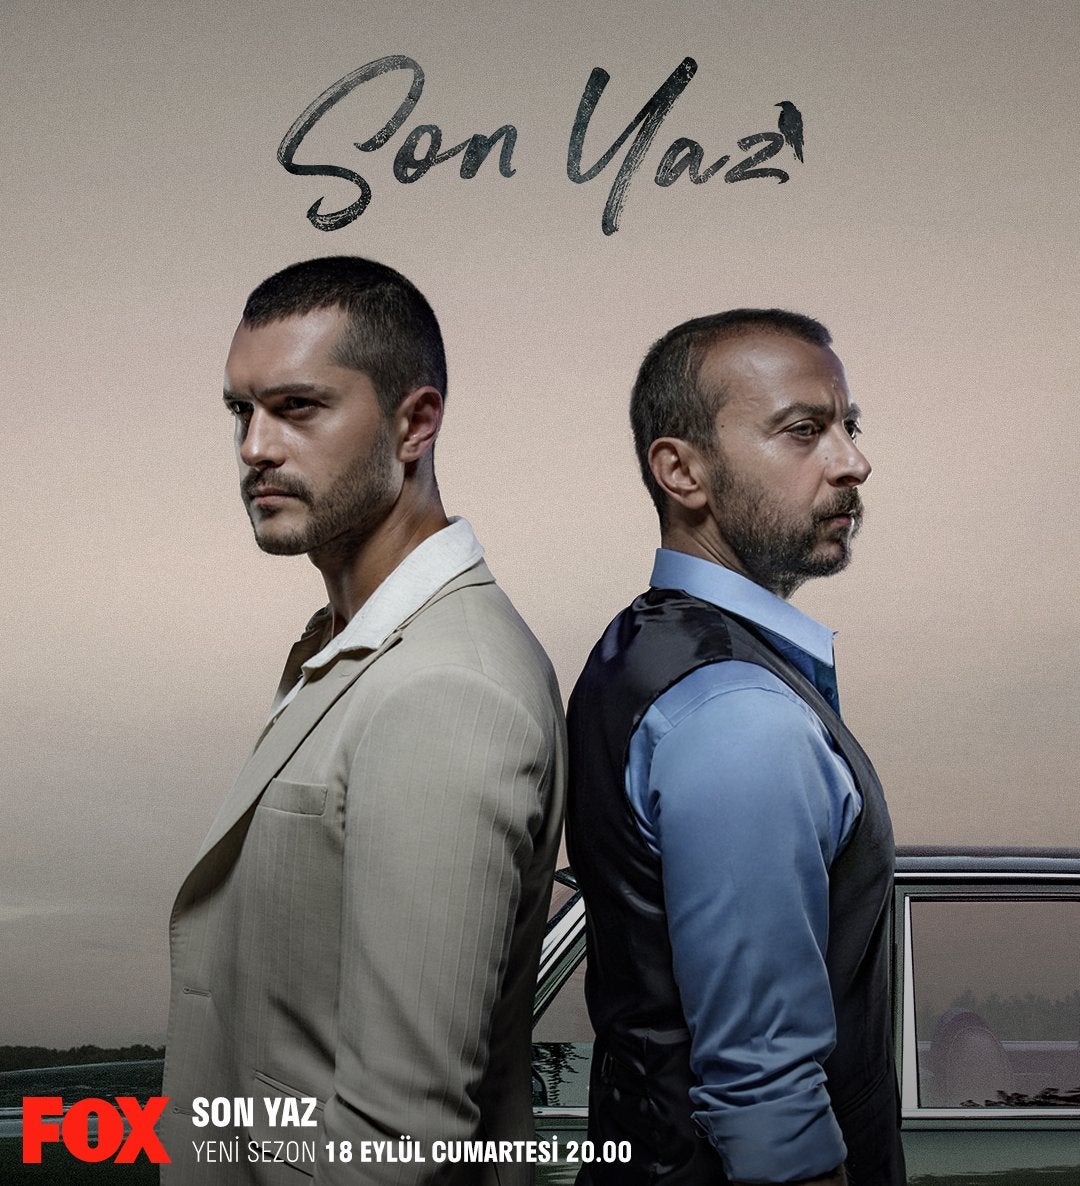 TV ratings for Last Summer (Son Yaz) in Turkey. FOX TV series